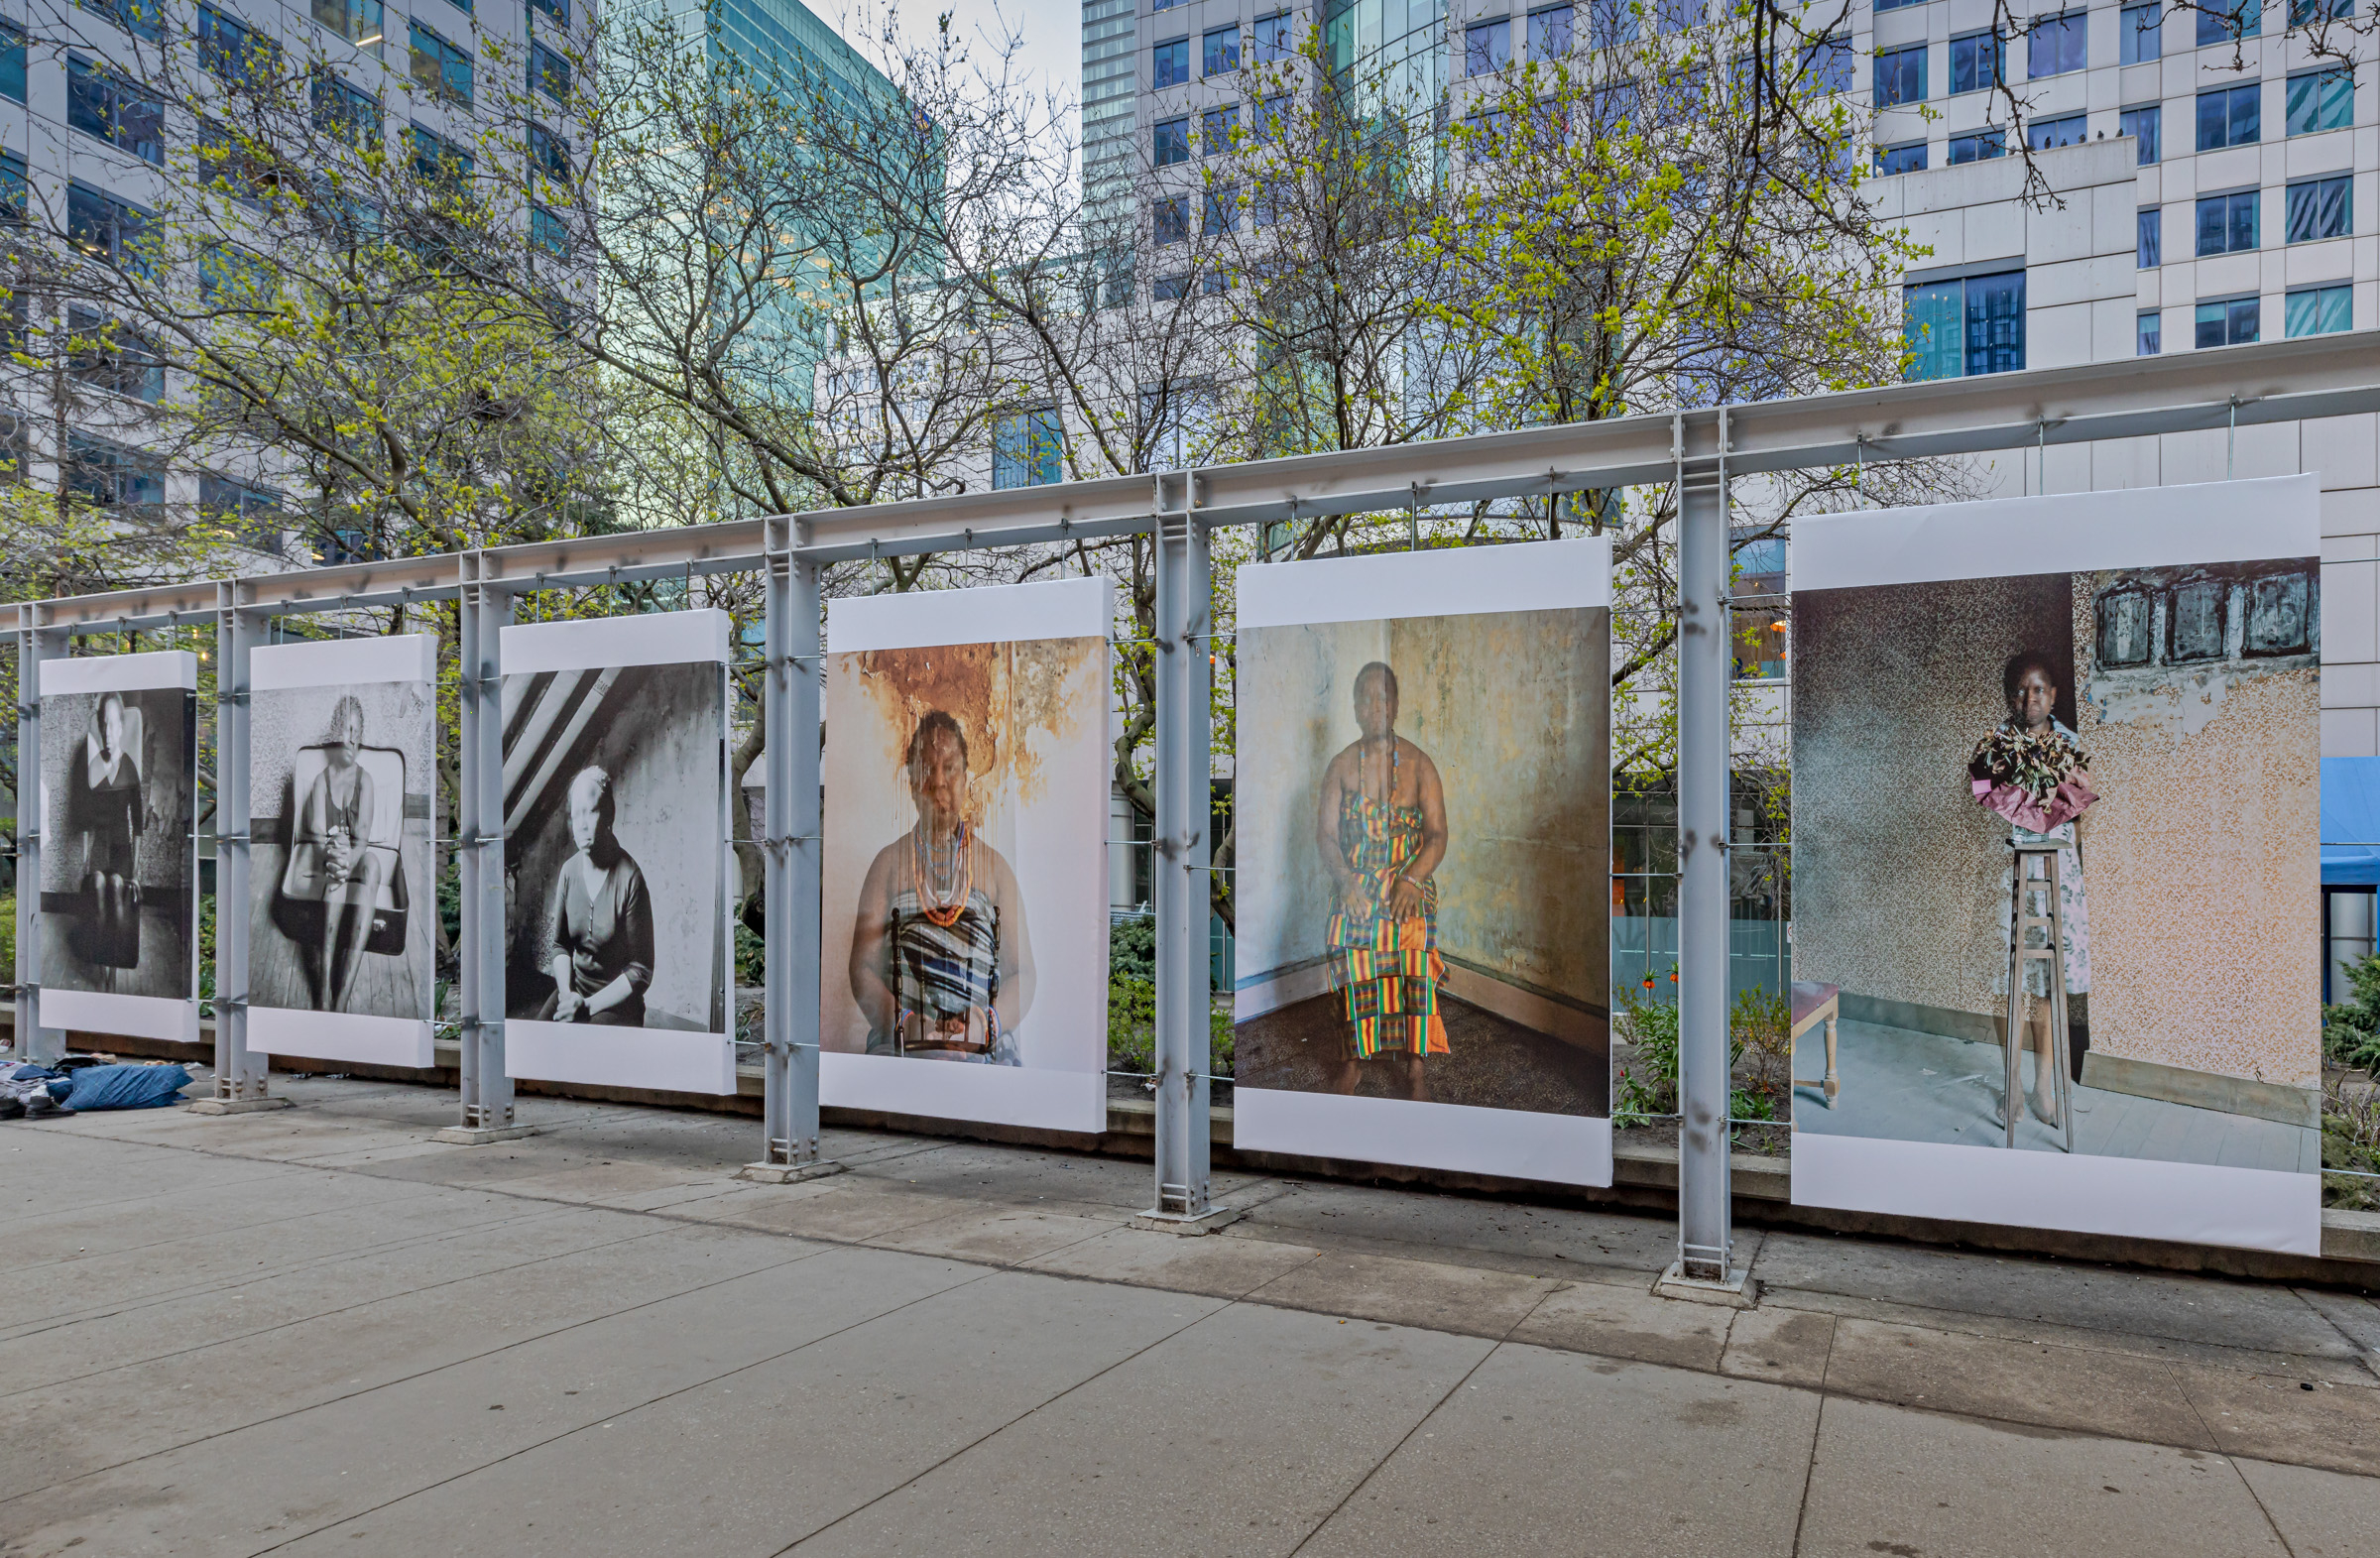     Hélène Amouzou, Writing Without Words: The Autoportraits of Hélène Amouzou, installation view, Metro Hall along King St W, Toronto, 2023. Courtesy of the artist and CONTACT. Photo: Toni Hafkenscheid

